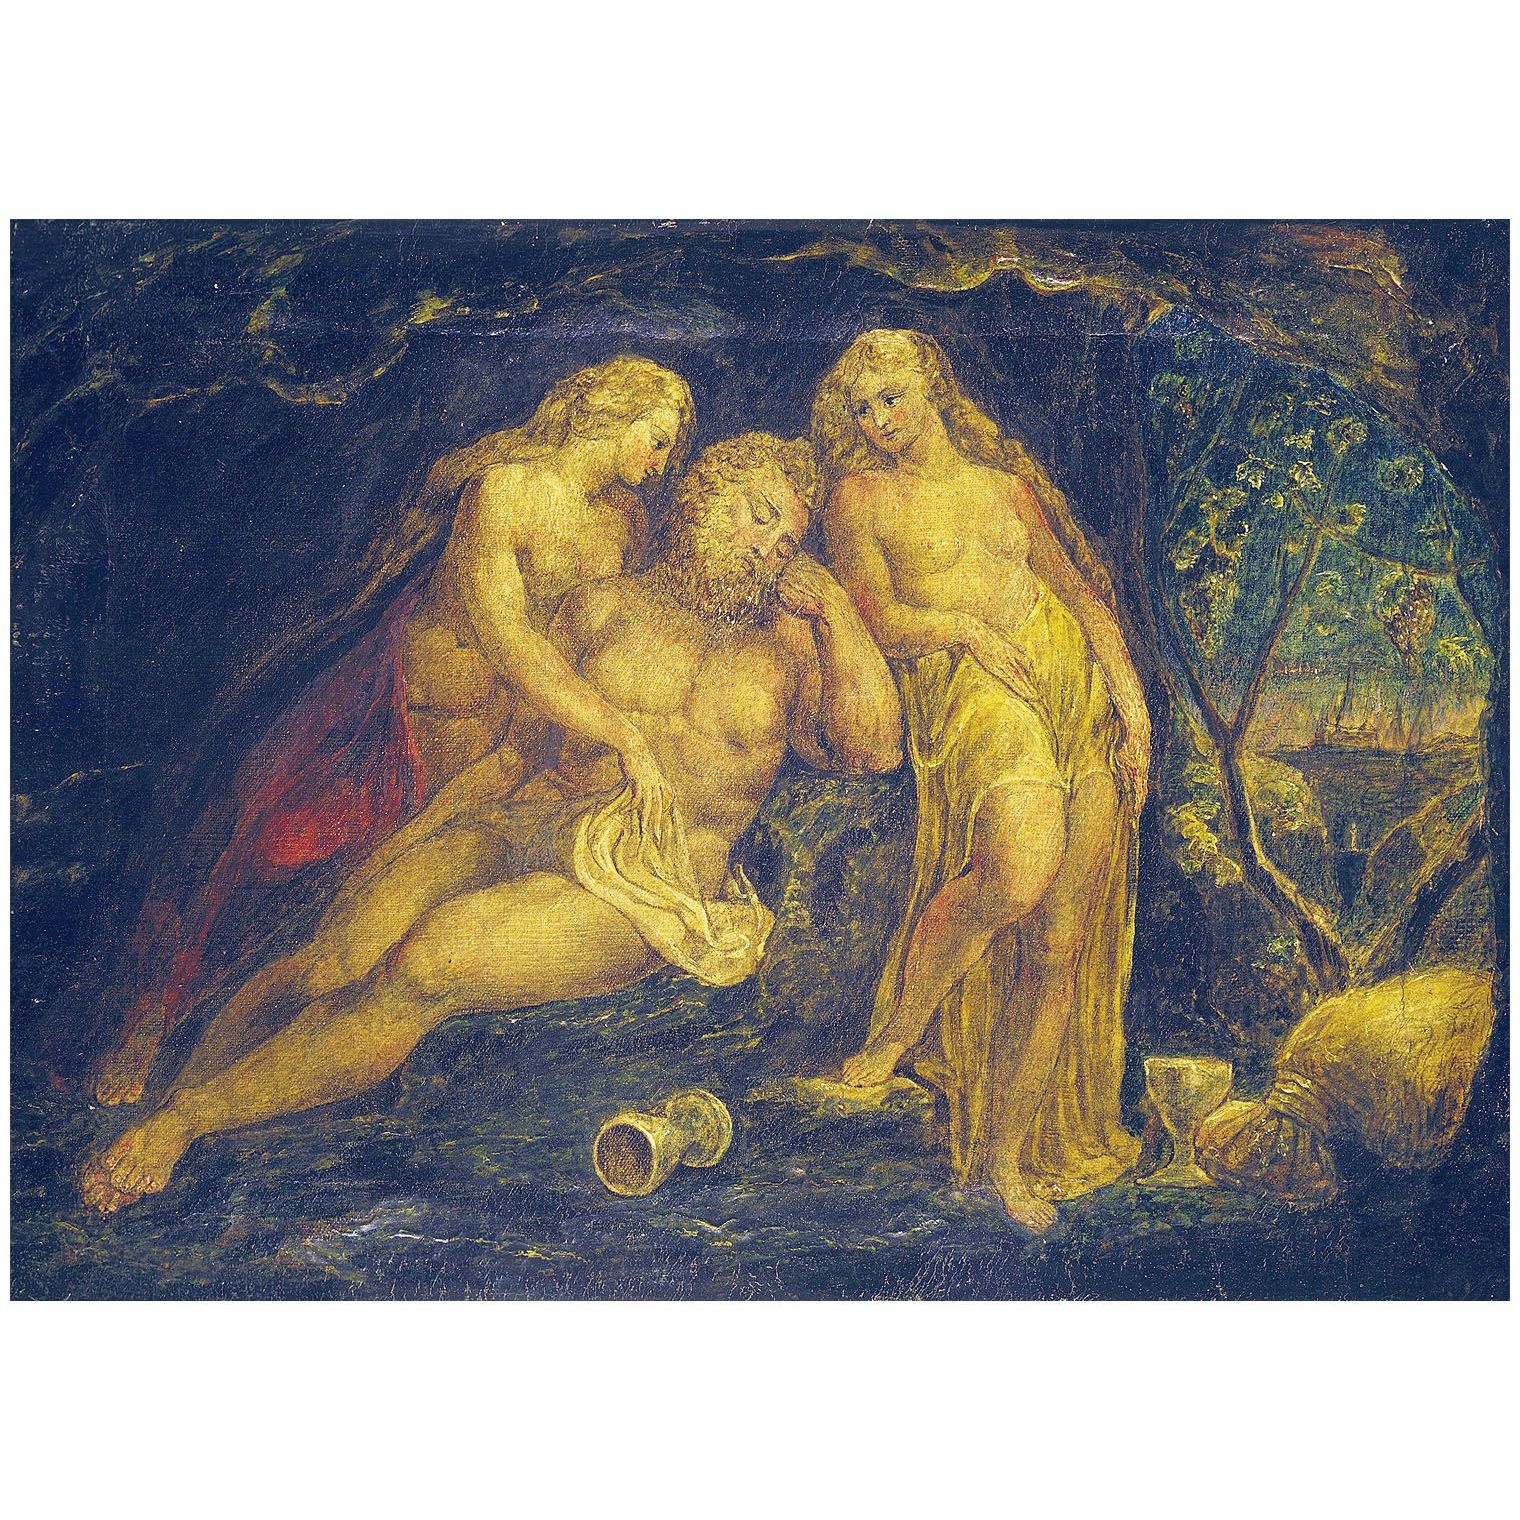 William Blake. Lot and His Daughters. 1800. Huntington Library, San Marino, California